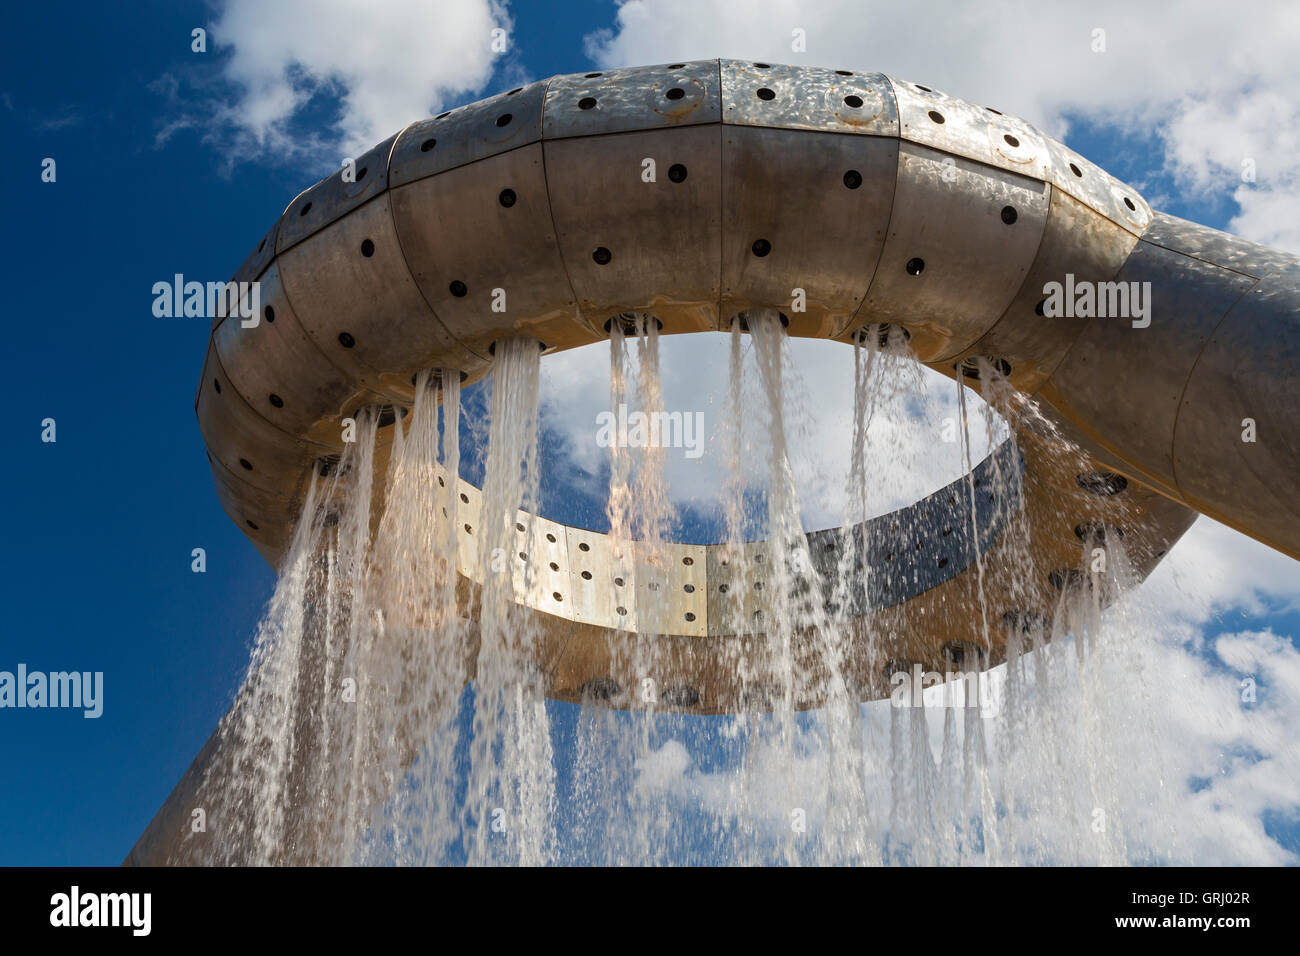 Detroit, Michigan - The Dodge Fountain in Hart Plaza, designed by Isamu Noguchi. Stock Photo